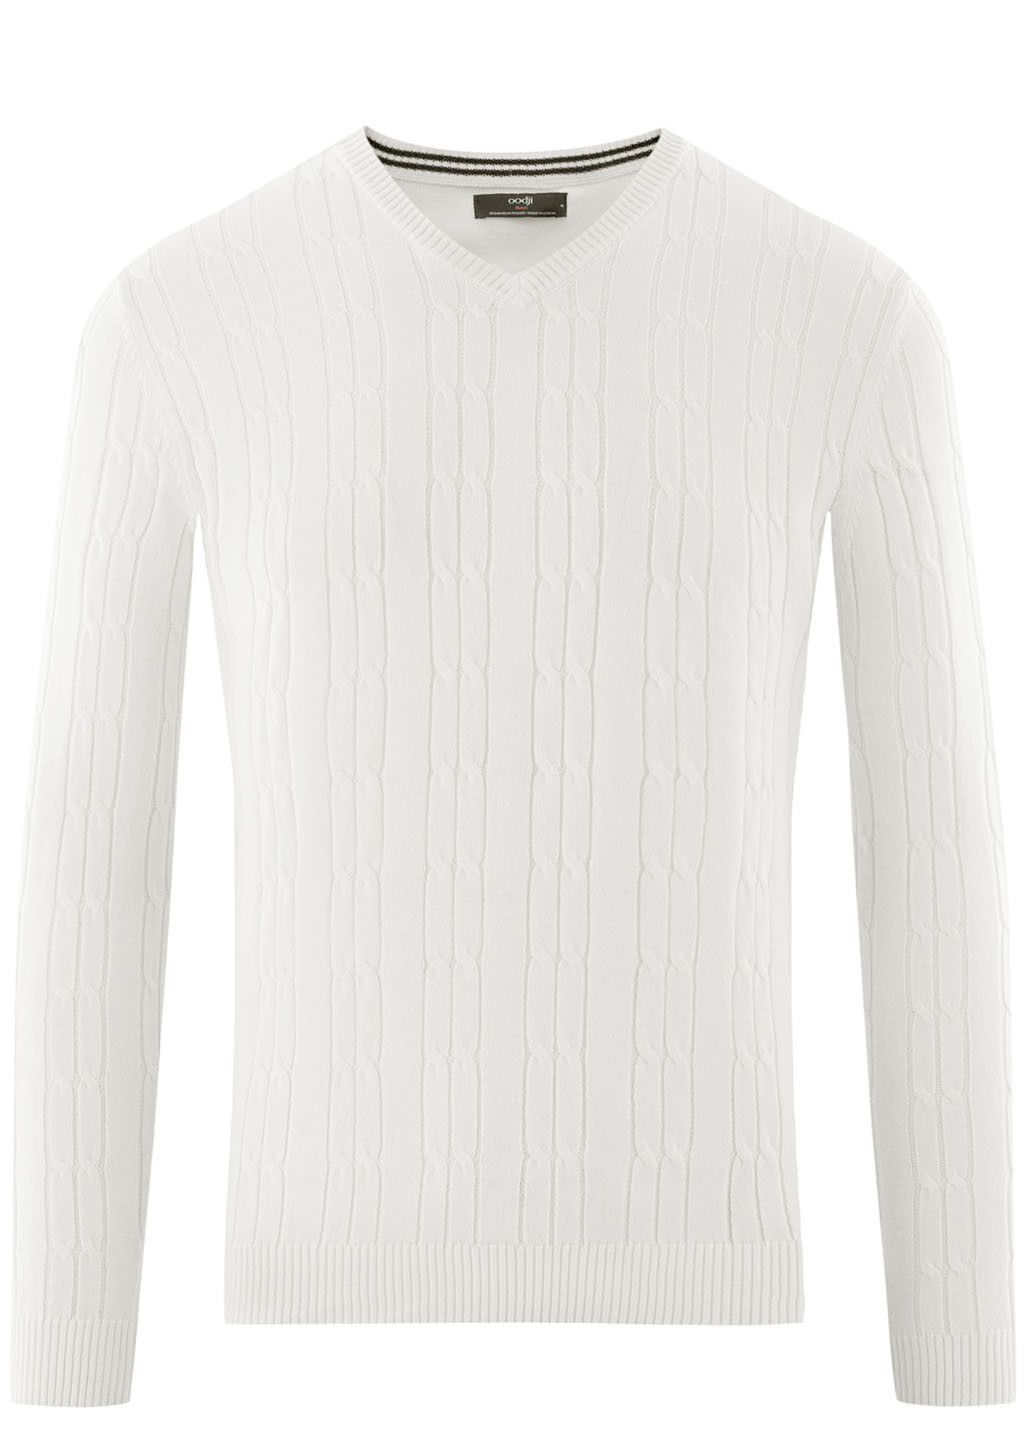 Белый демисезонный пуловер пуловер Oodji